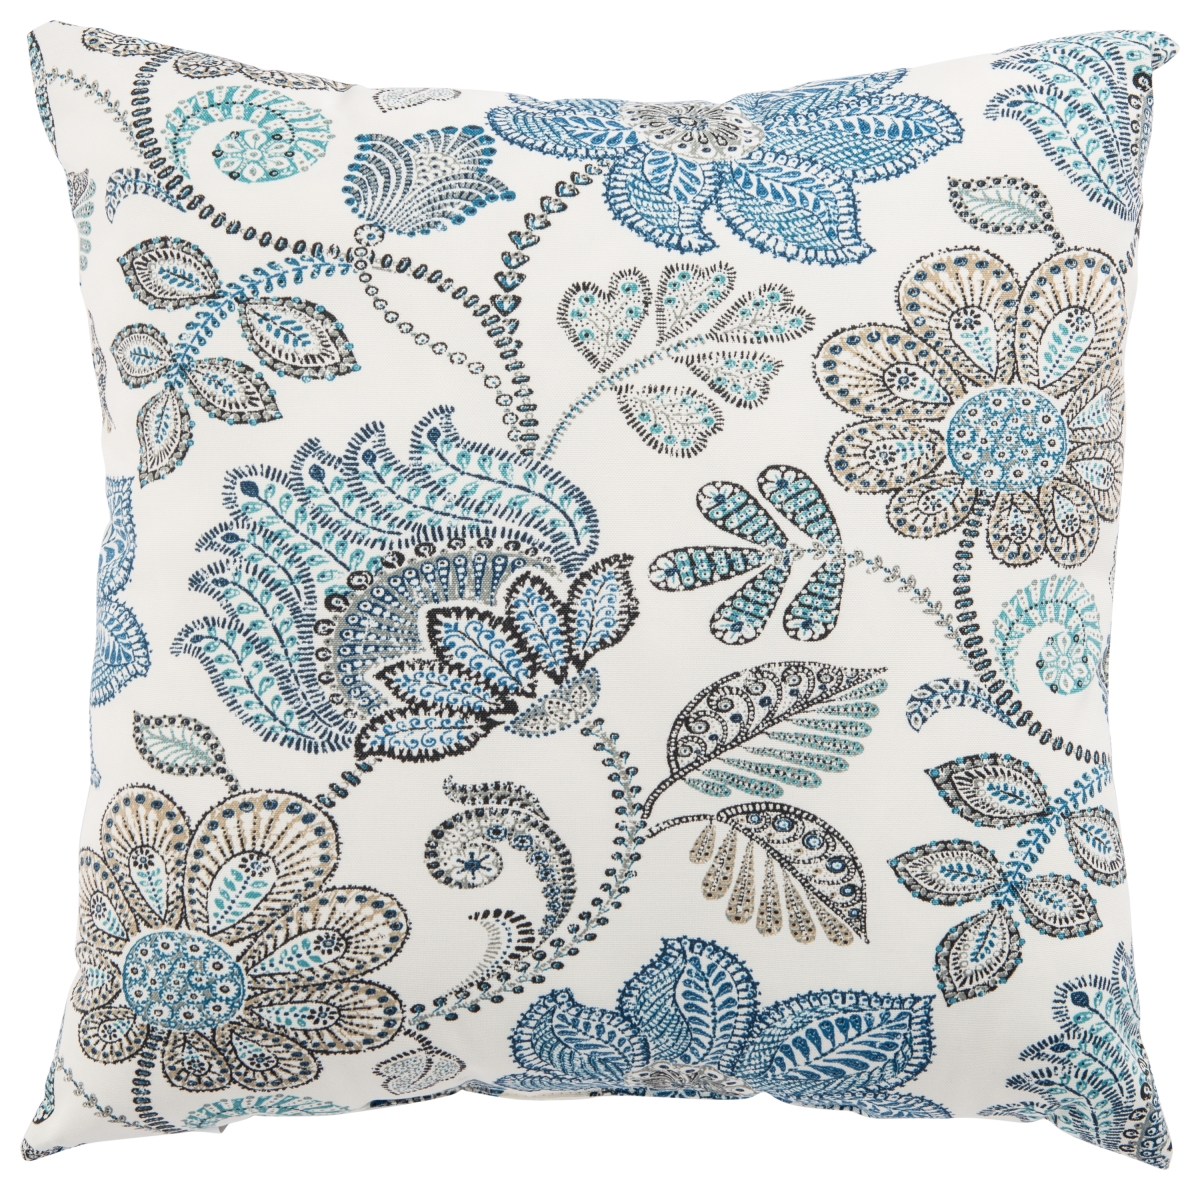 Plp100071 18 X 18 In. Veranda Busan Blue & White Floral Indoor & Outdoor Throw Pillow